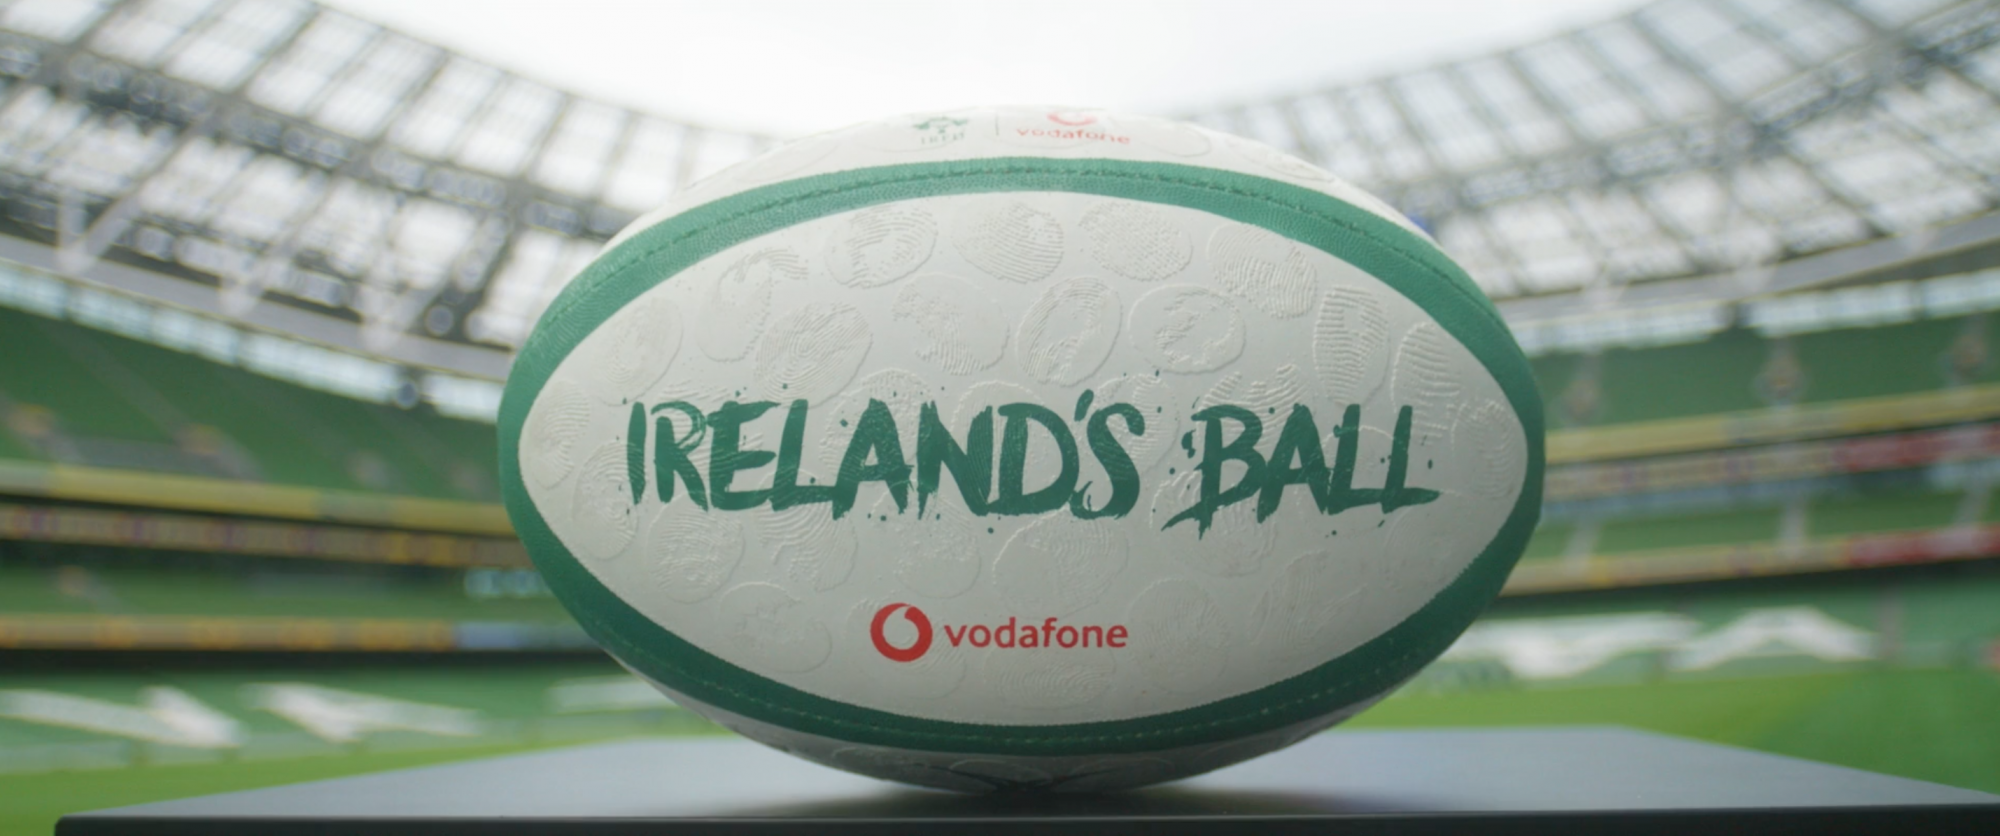 ‘Ireland’s Ball’ – Vodafone & IRFU